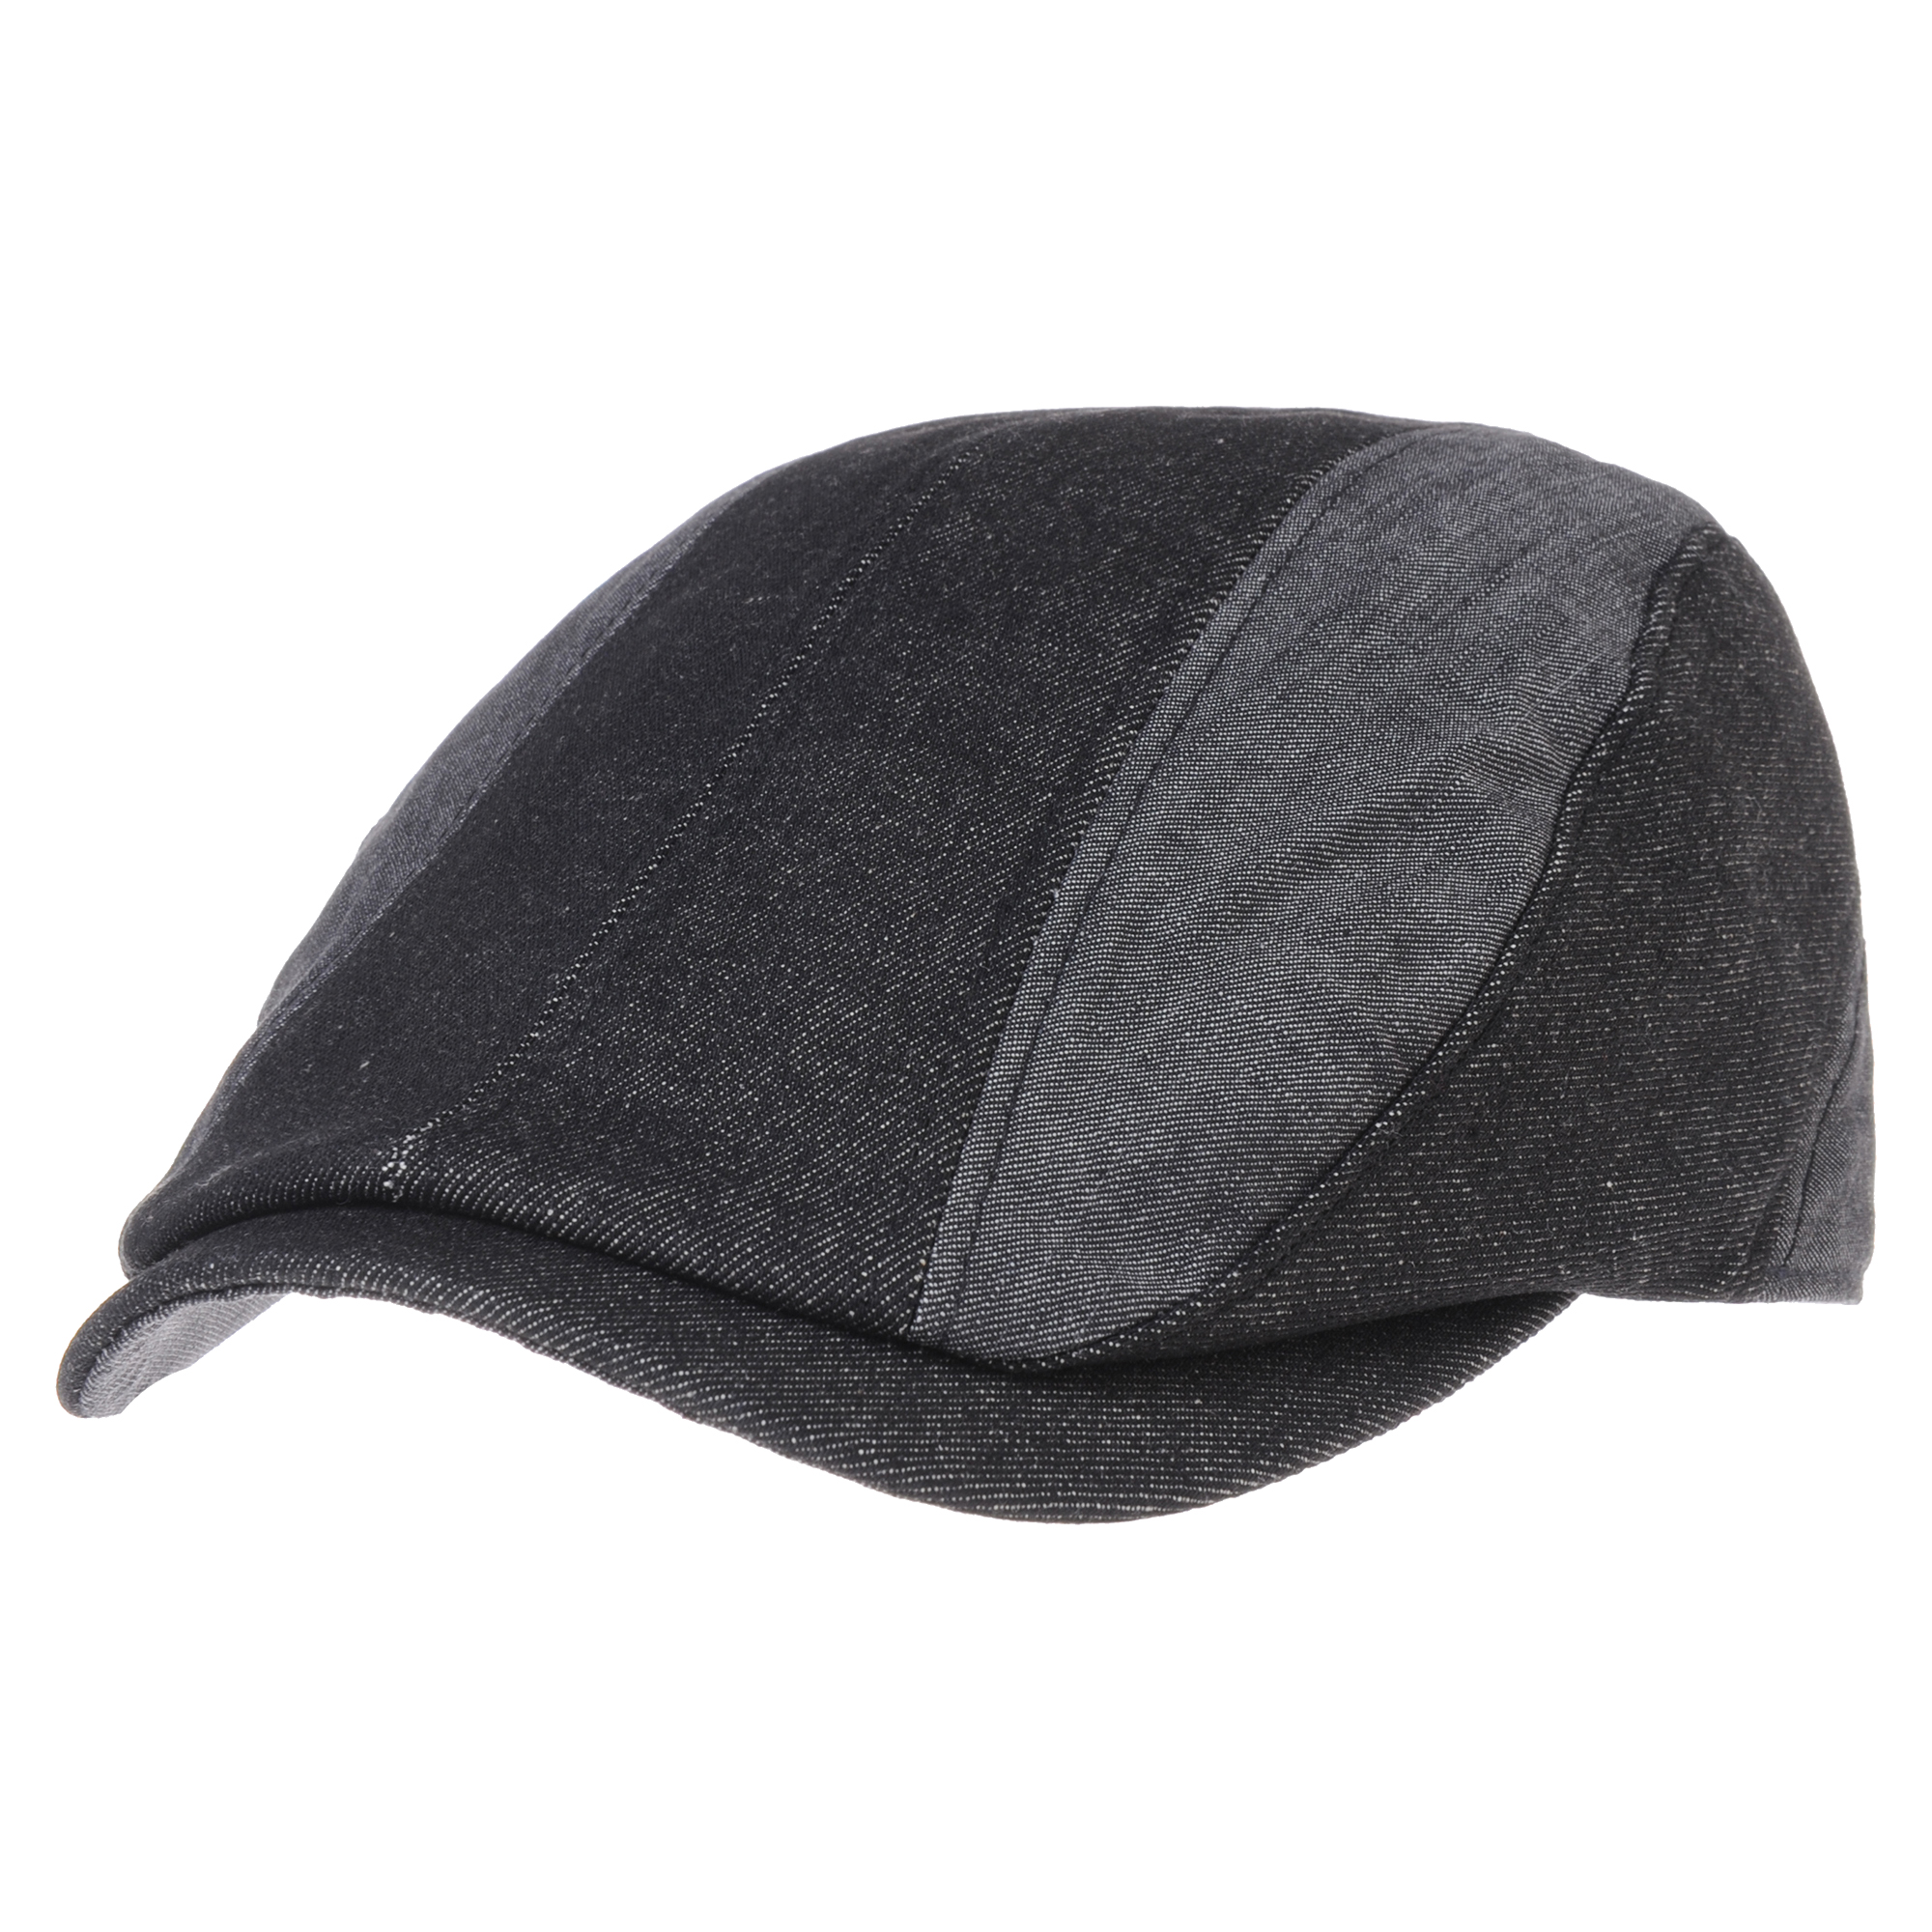 WITHMOONS Newsboy Hat Flat Cap Denim Vertical Stripe LD3299 | eBay